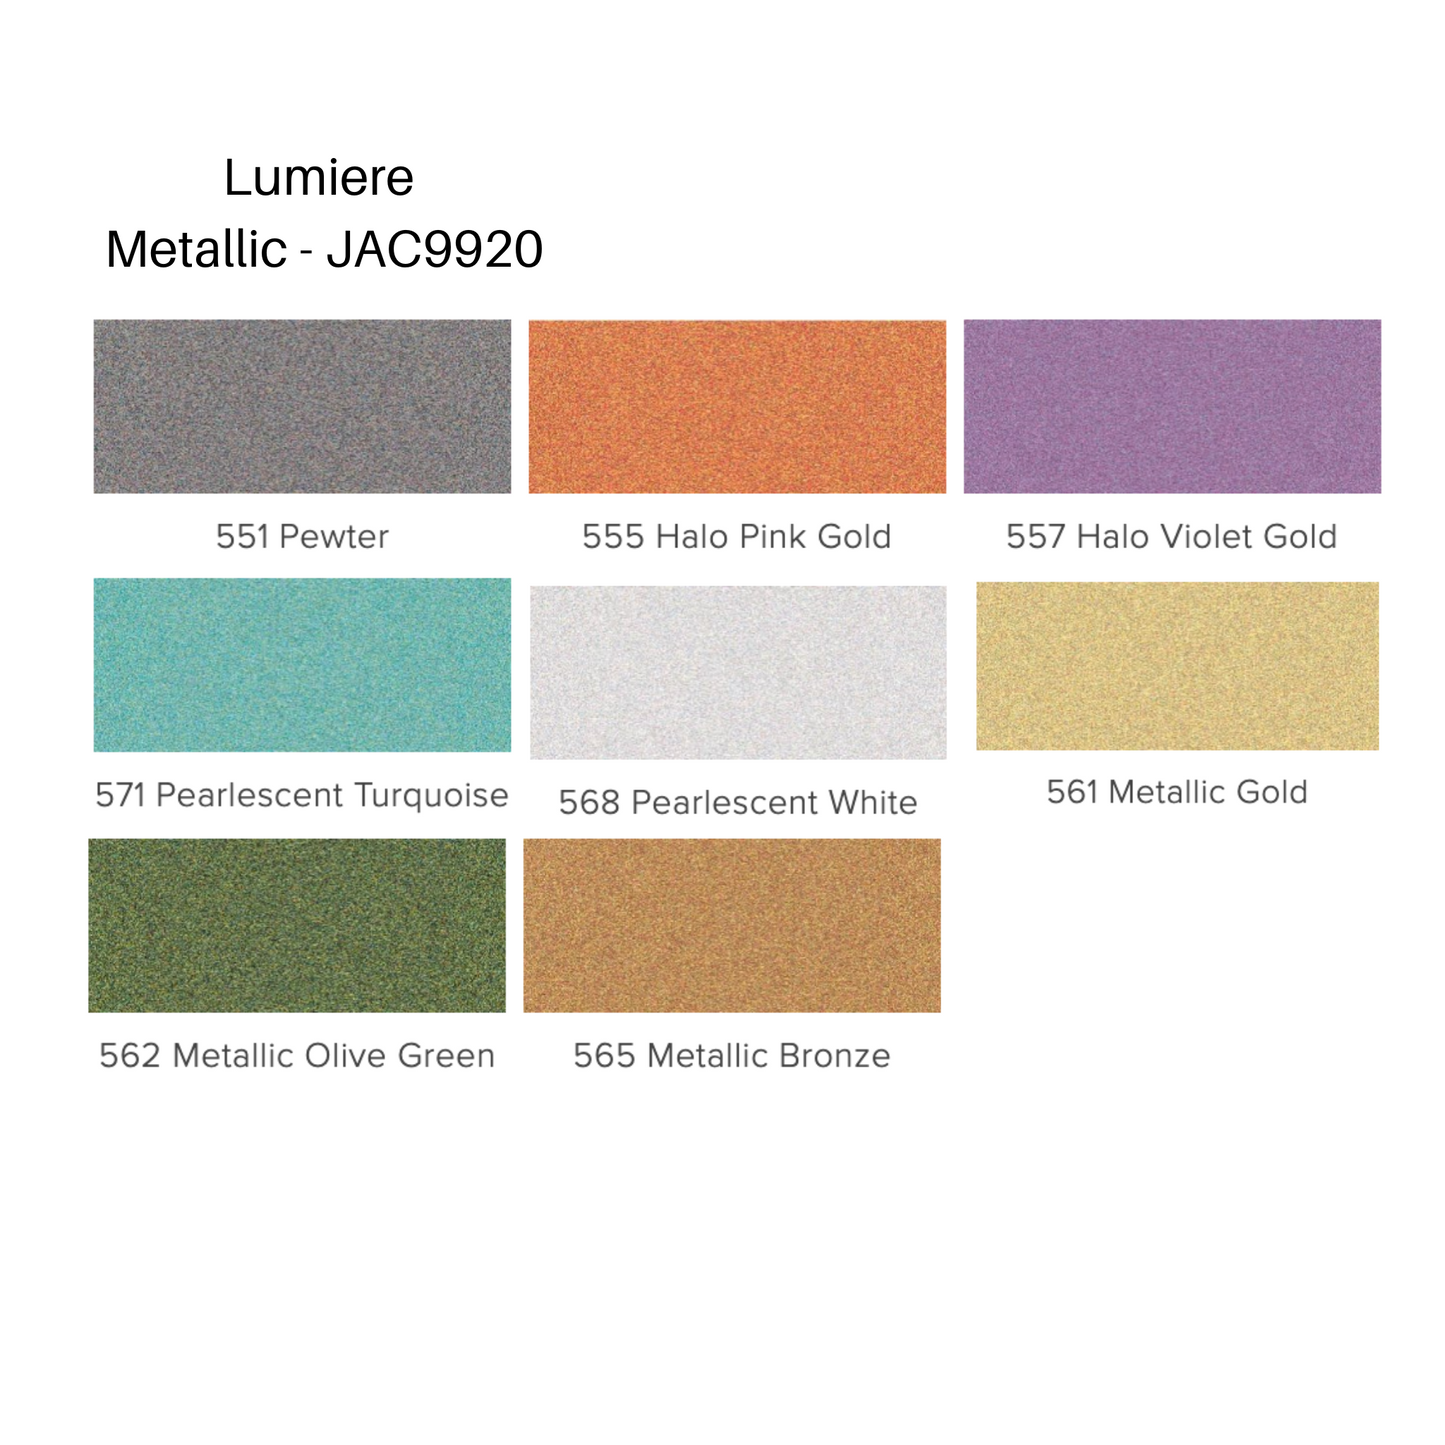 colour color chart Lumiere metallic exciter pack - jacquard - 8 pack - 2 sew textiles - art quilt supplies